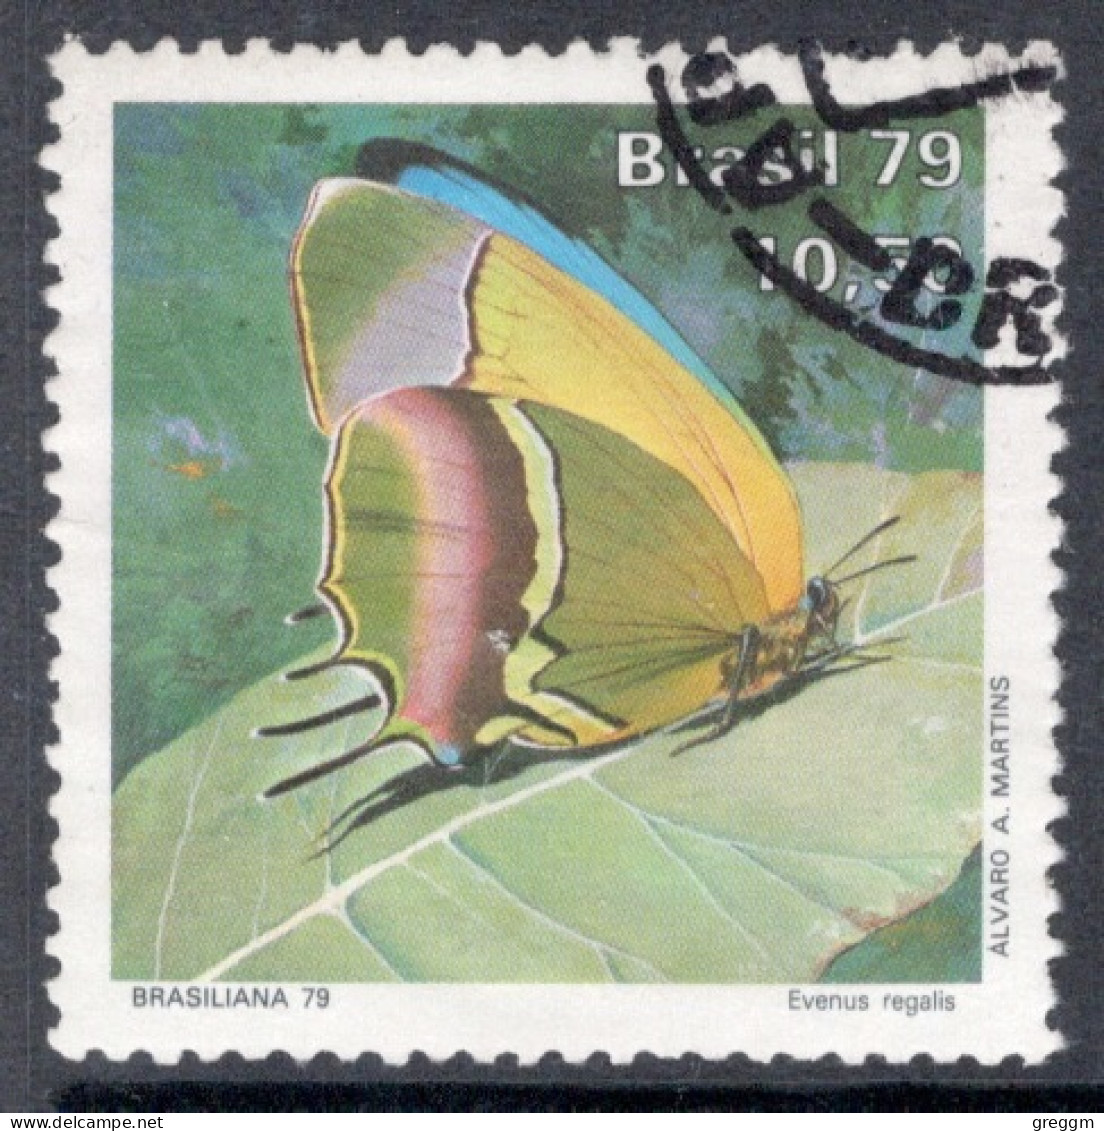 Brazil 1979 A Single Stamp International Stamp Exhibition "Brasiliana 79" - Butterflies In Fine Used - Gebraucht